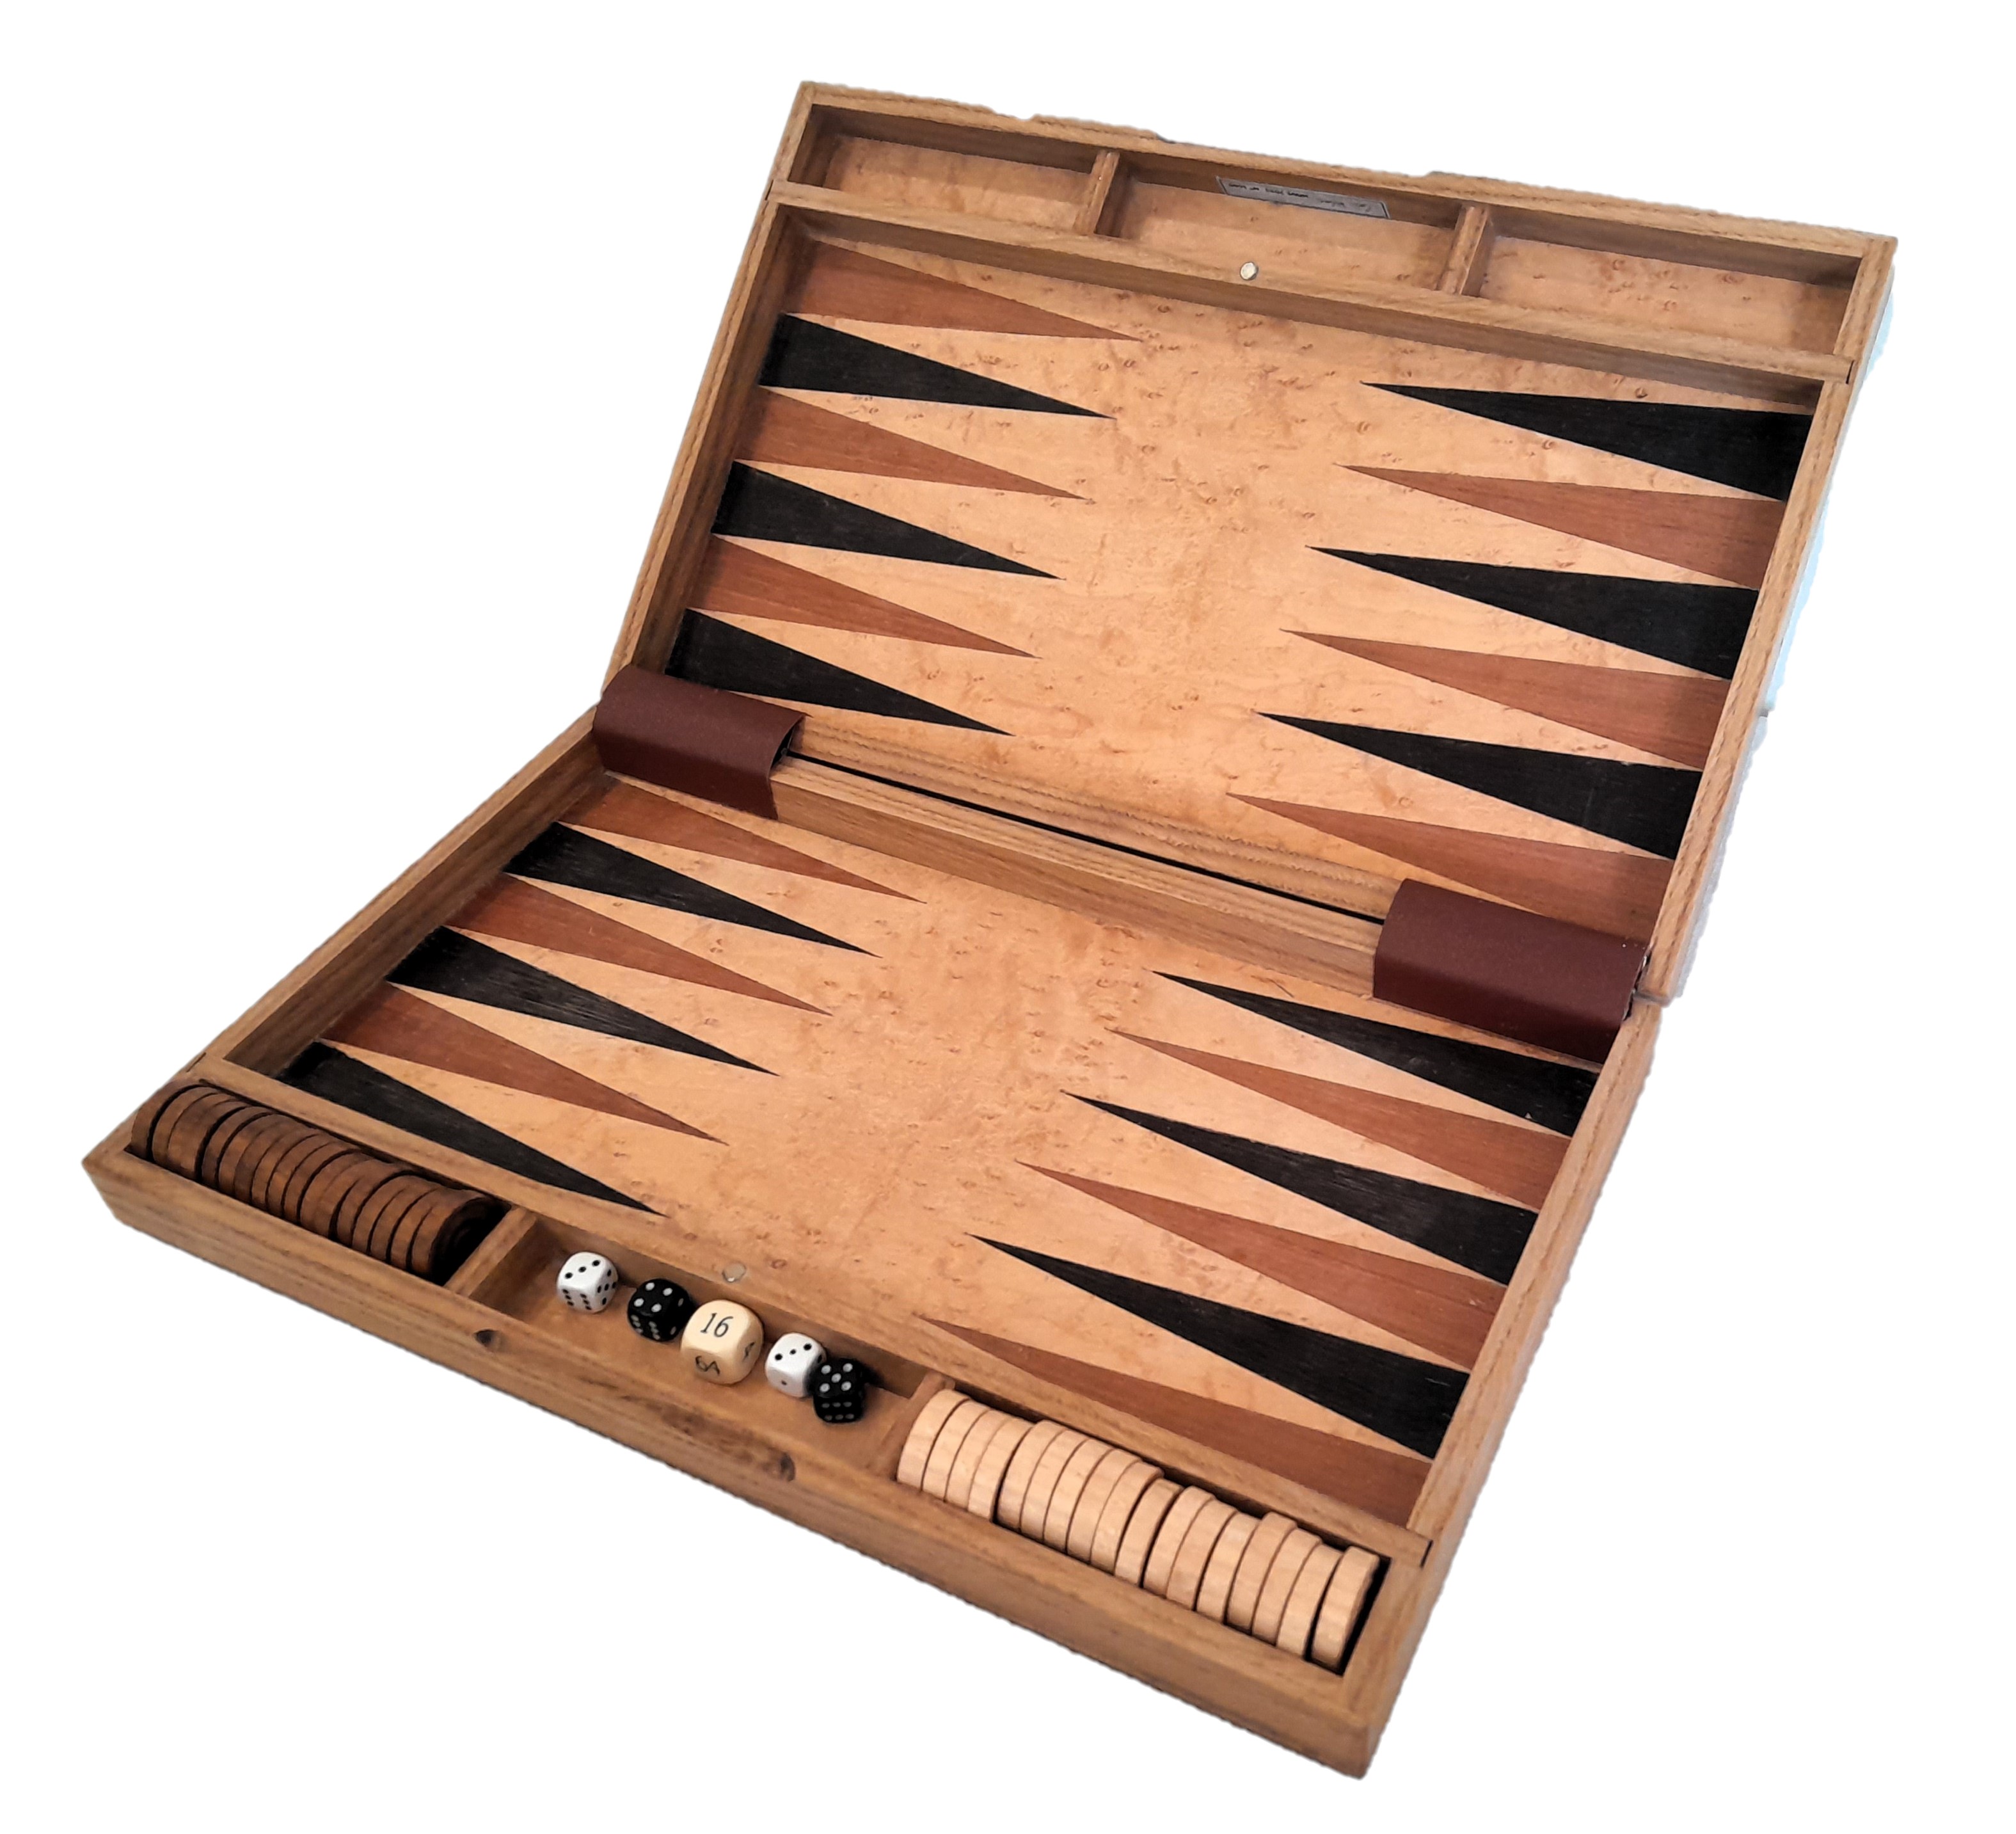 Backgammon Board 1672 - Click for details